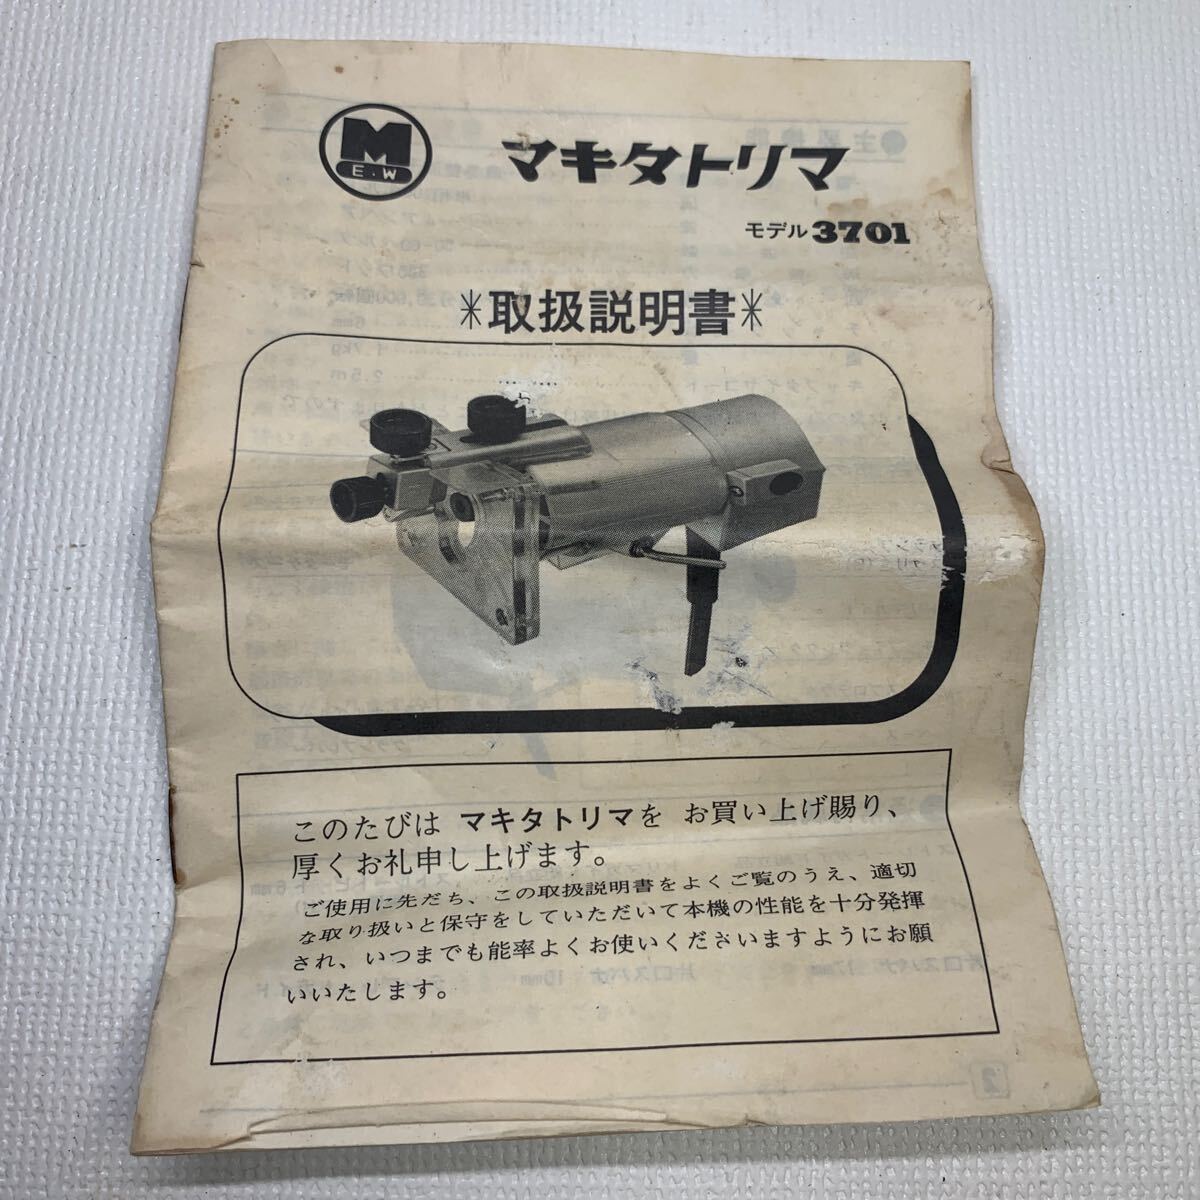 MAKITA マキタ トリマ 3701 電動工具 中古品 動作品の画像9